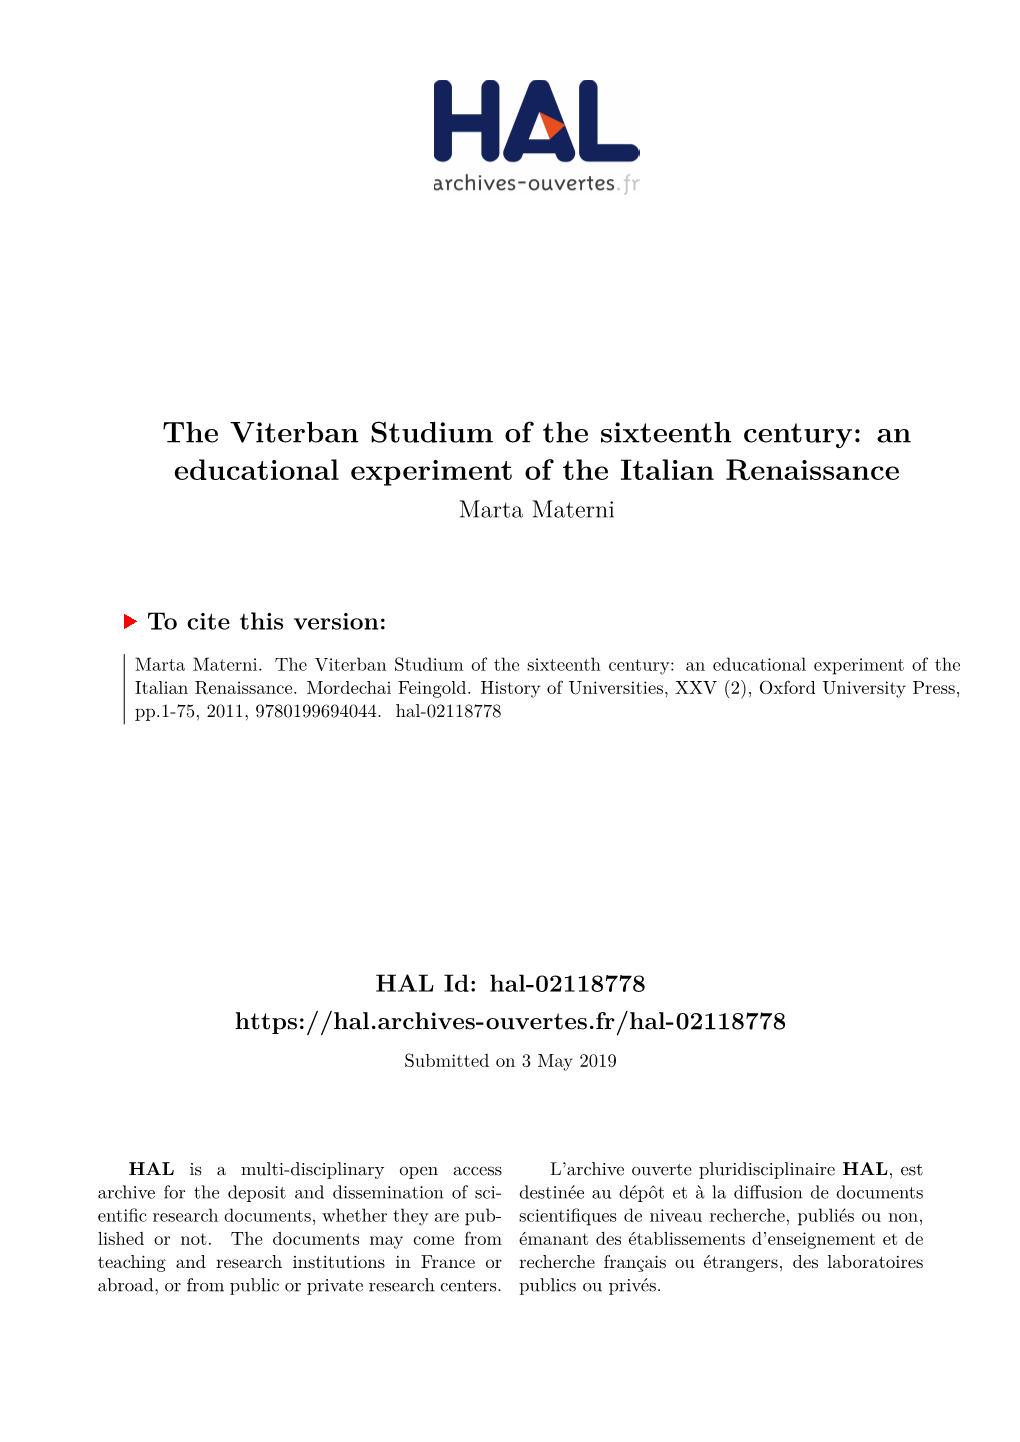 The Viterban Studium of the Sixteenth Century: an Educational Experiment of the Italian Renaissance Marta Materni